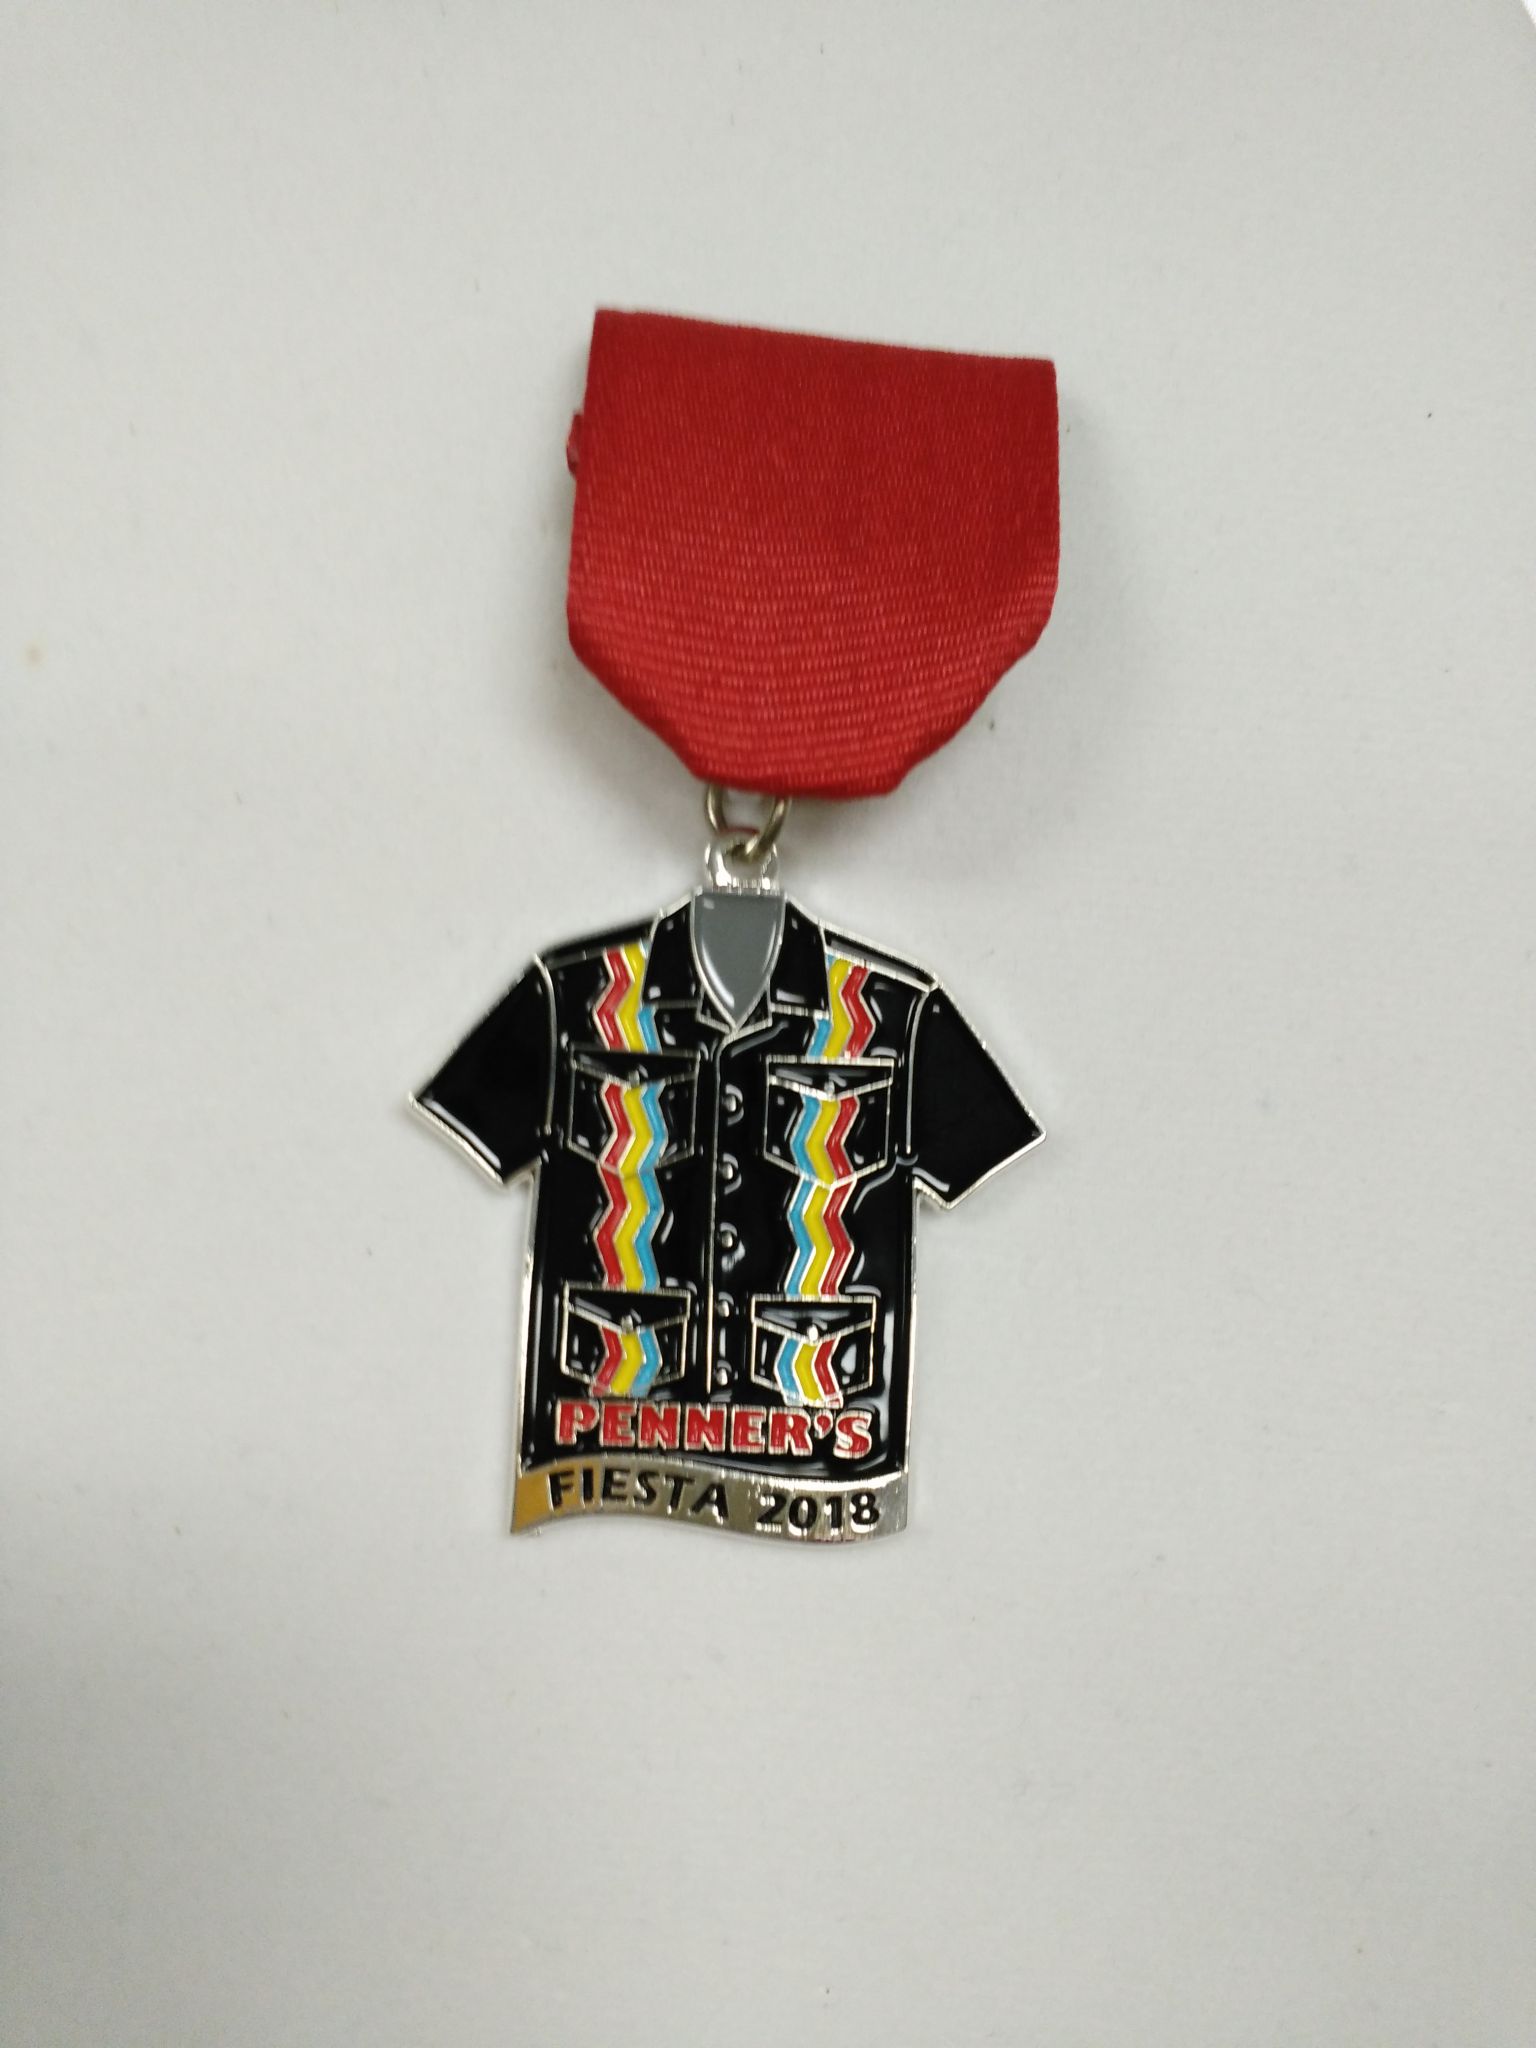 Fiesta medal winners 2018